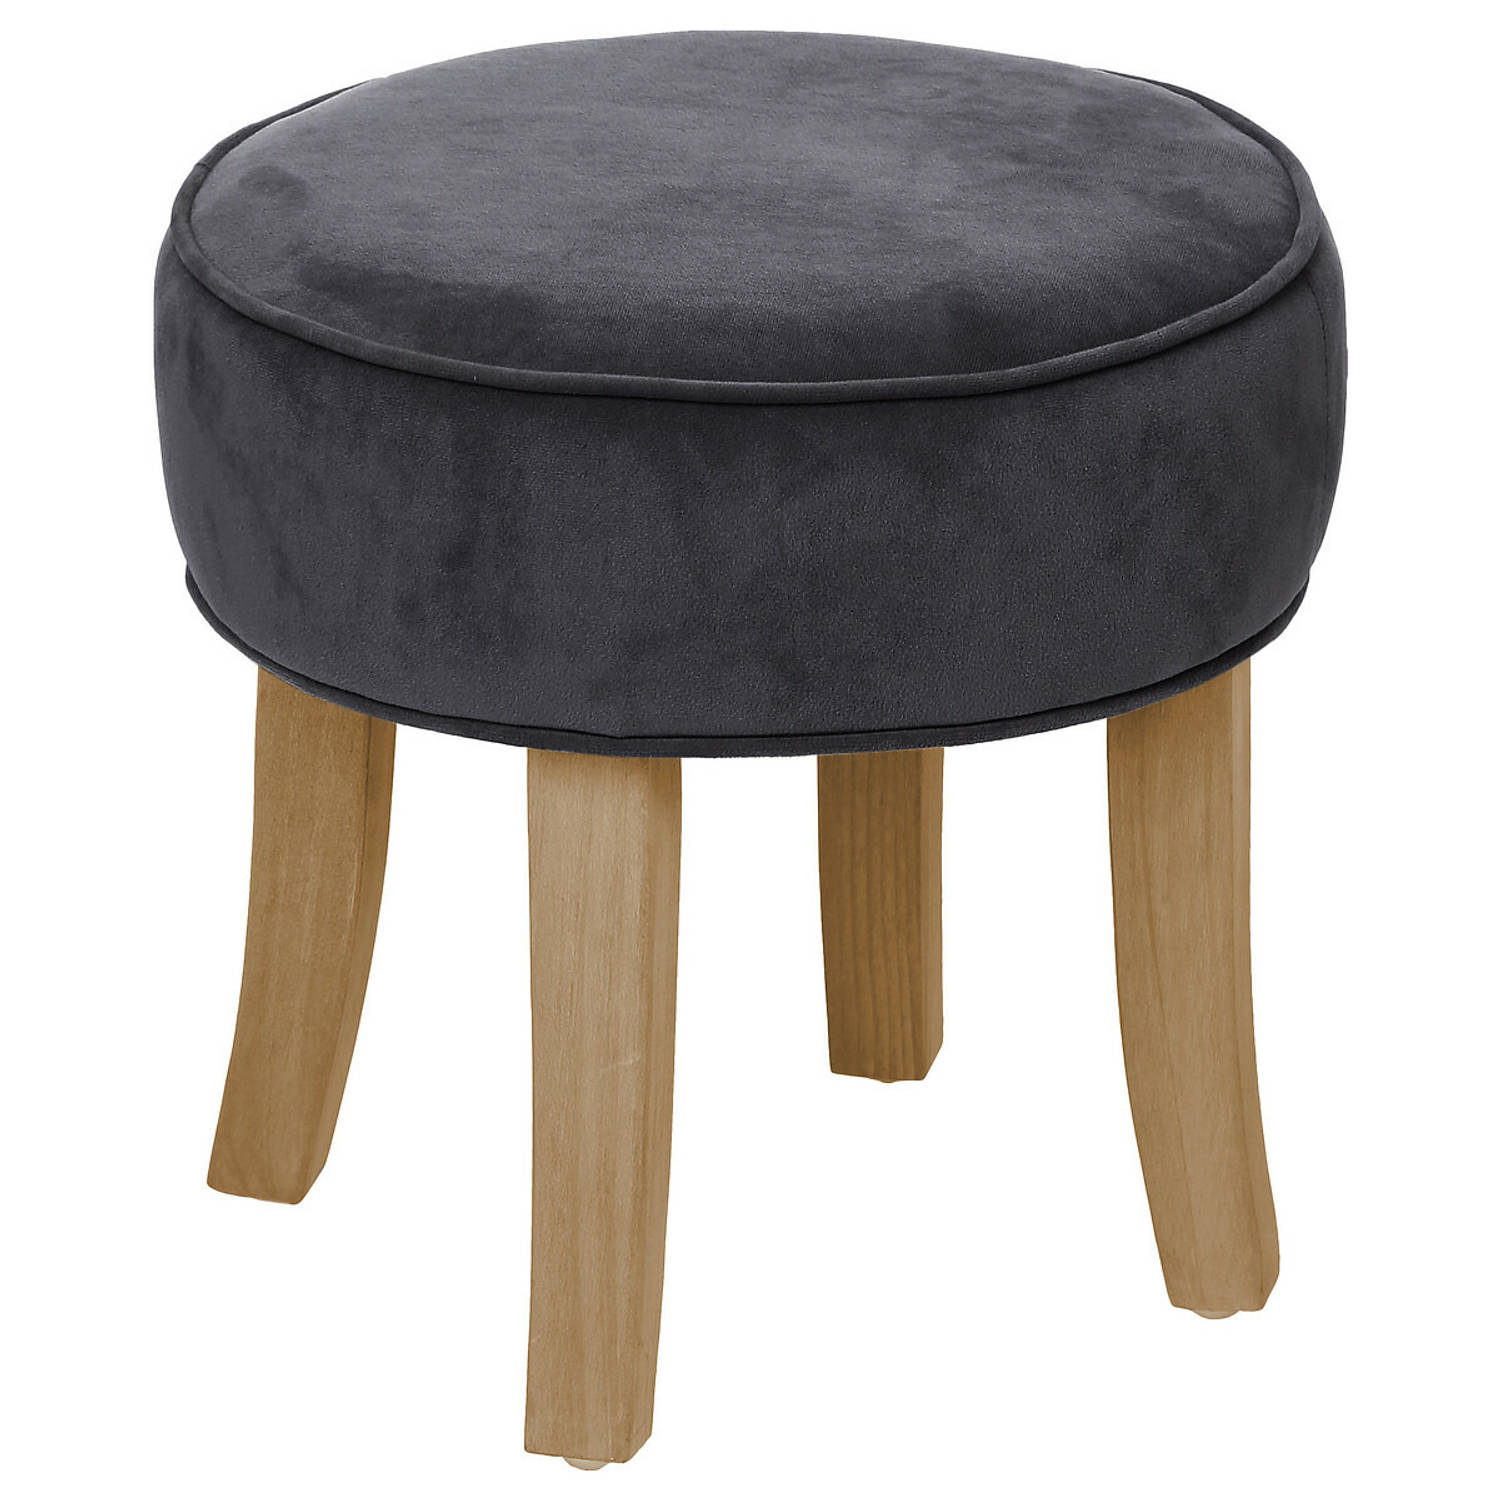 Atmosphera Zit krukje-bijzet stoel hout-stof grijs fluweel D35 x H40 cm Krukjes